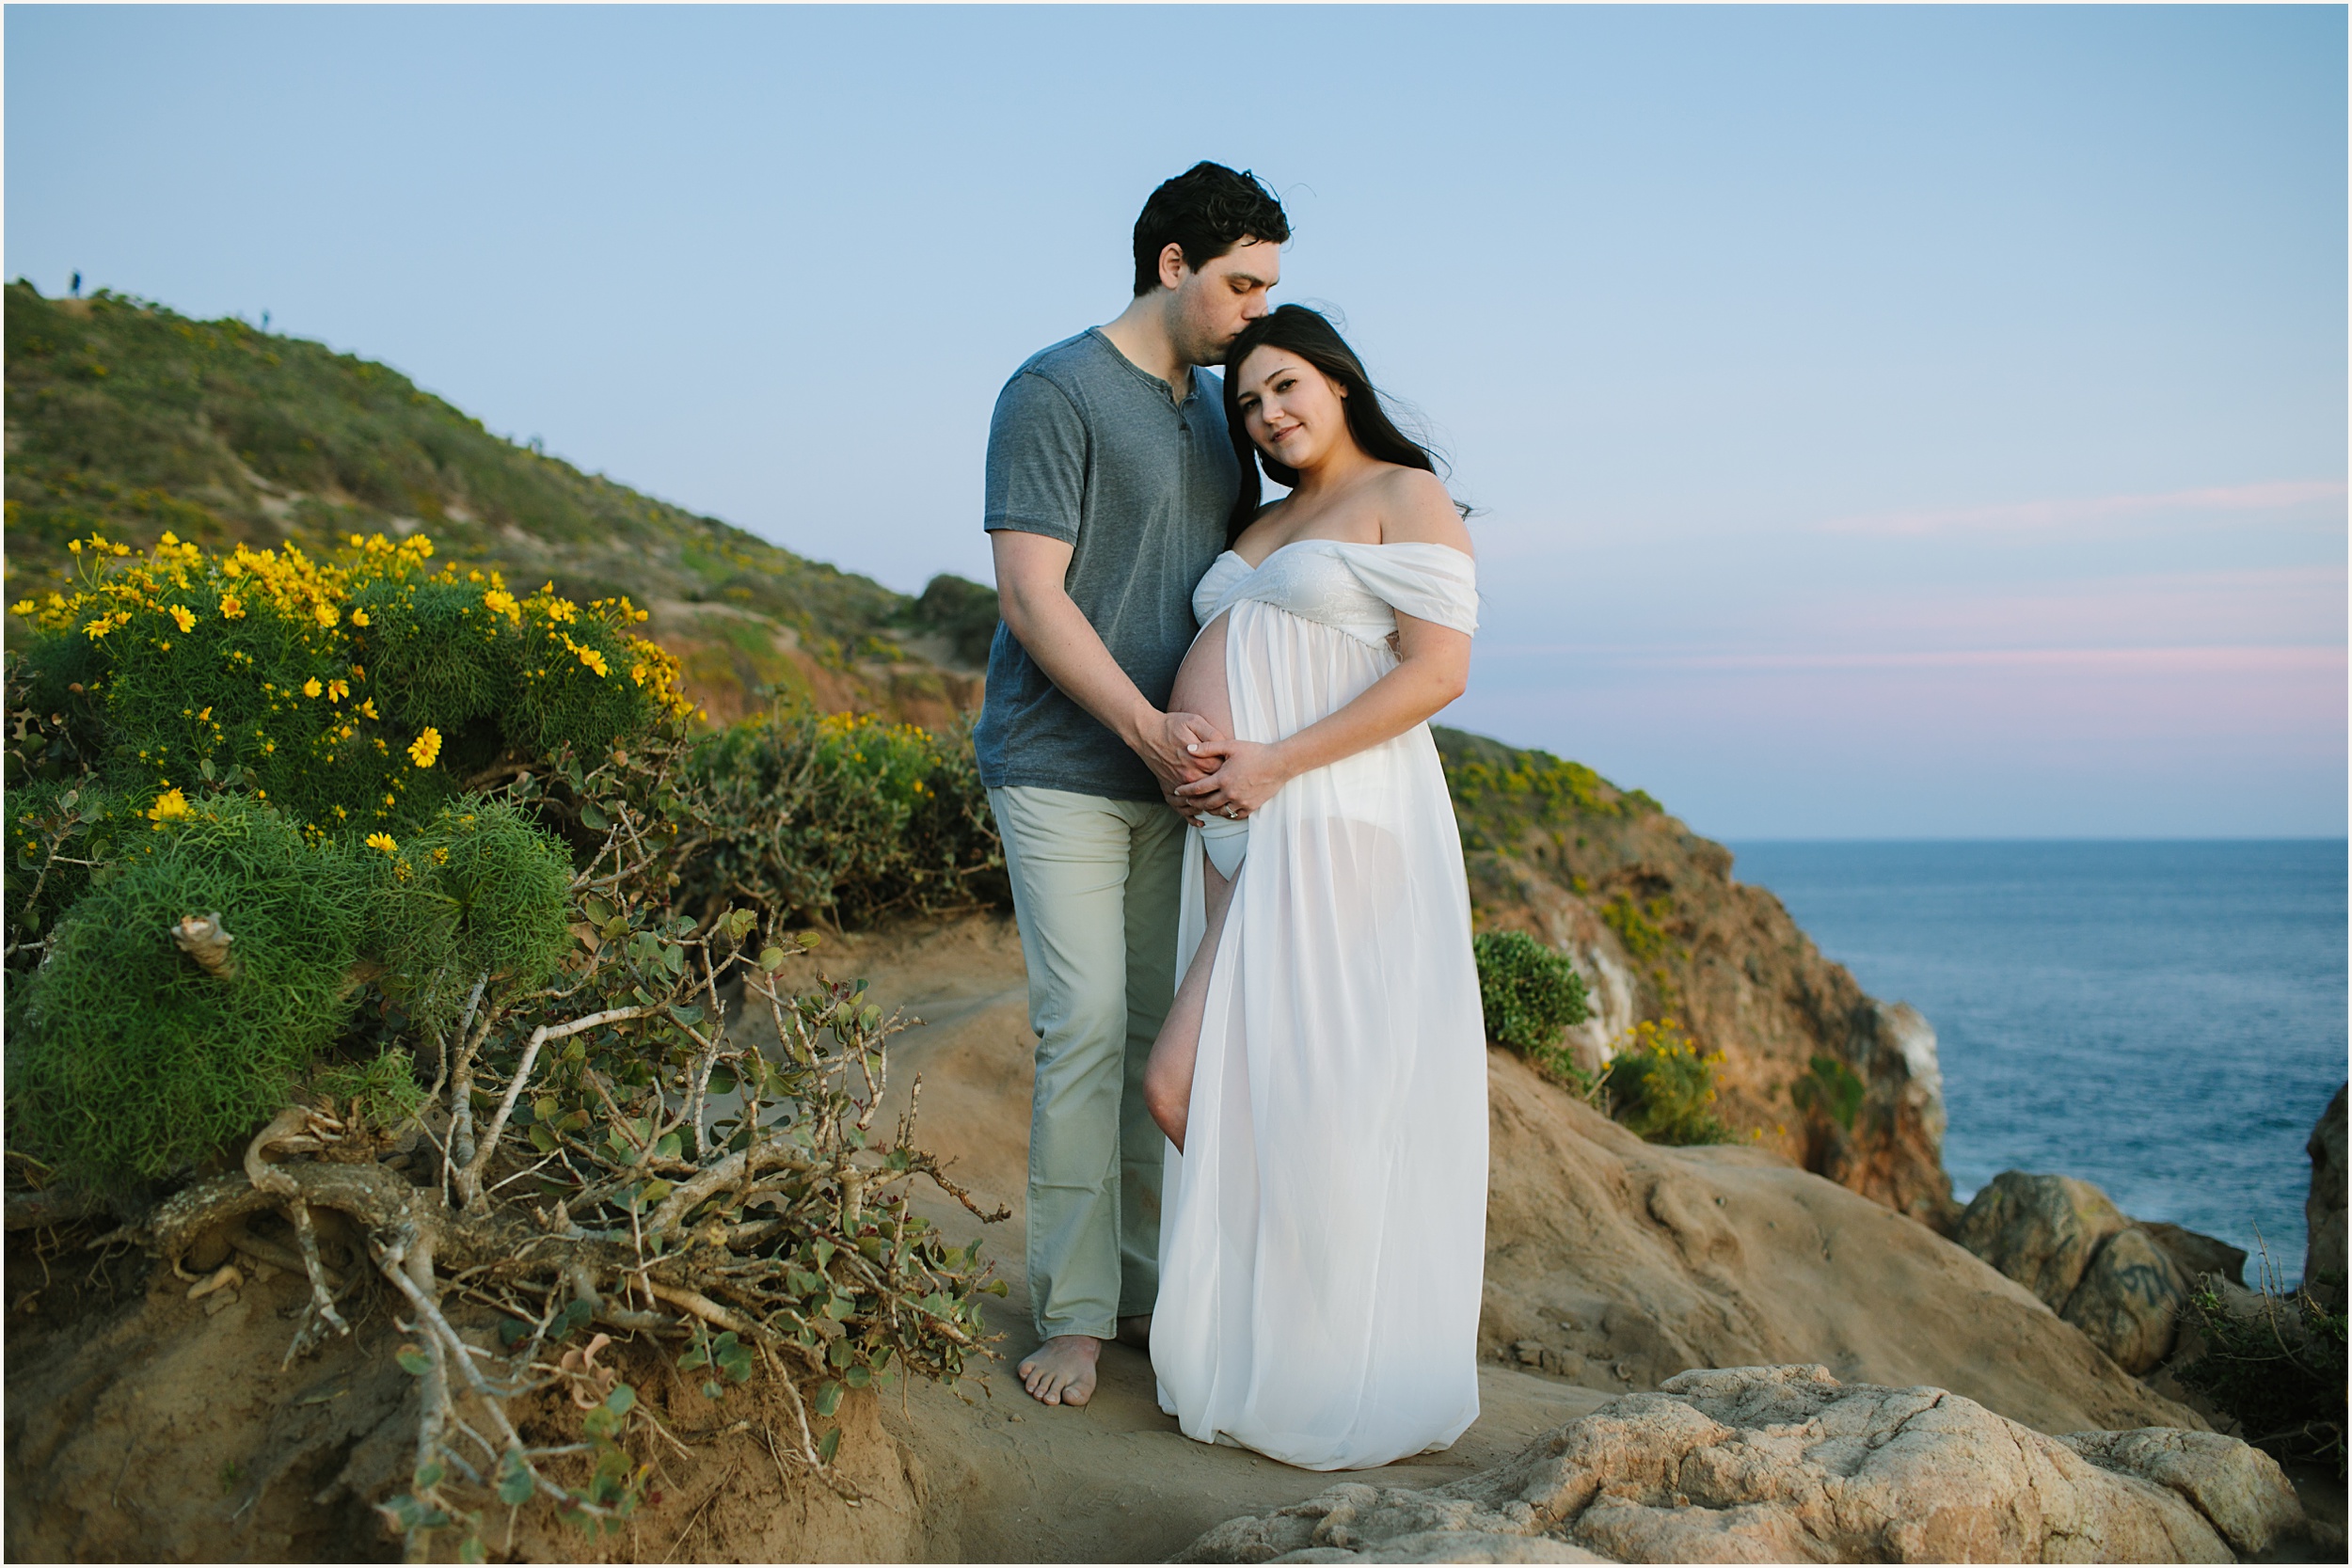 Michelle-and-Chris_0006 Michelle & Chris | Dreamy Maternity Shoot in Malibu, CA